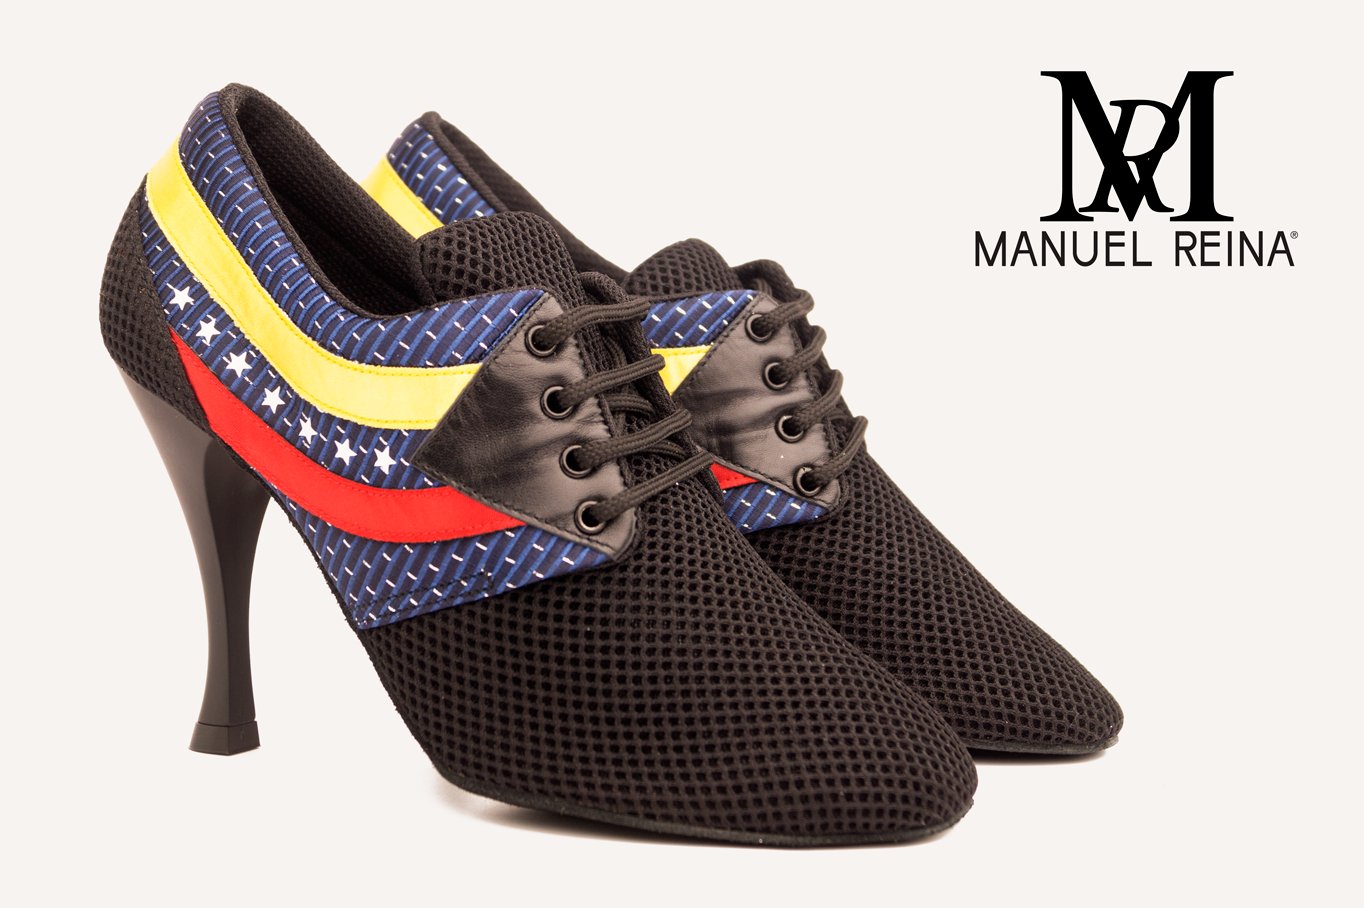 Manuel Reina · Shoes Twitter: "Modelo exclusivo diseñado bajo pedido!!!! 🇻🇪 Desireé Sport Venezuela 🇻🇪❤️ #venezuela #homenajevenezuela #zapatosdebaile #venezuelashoes #bailalibre #bailarvenezuela #manuelreina #customshoes #custom ...